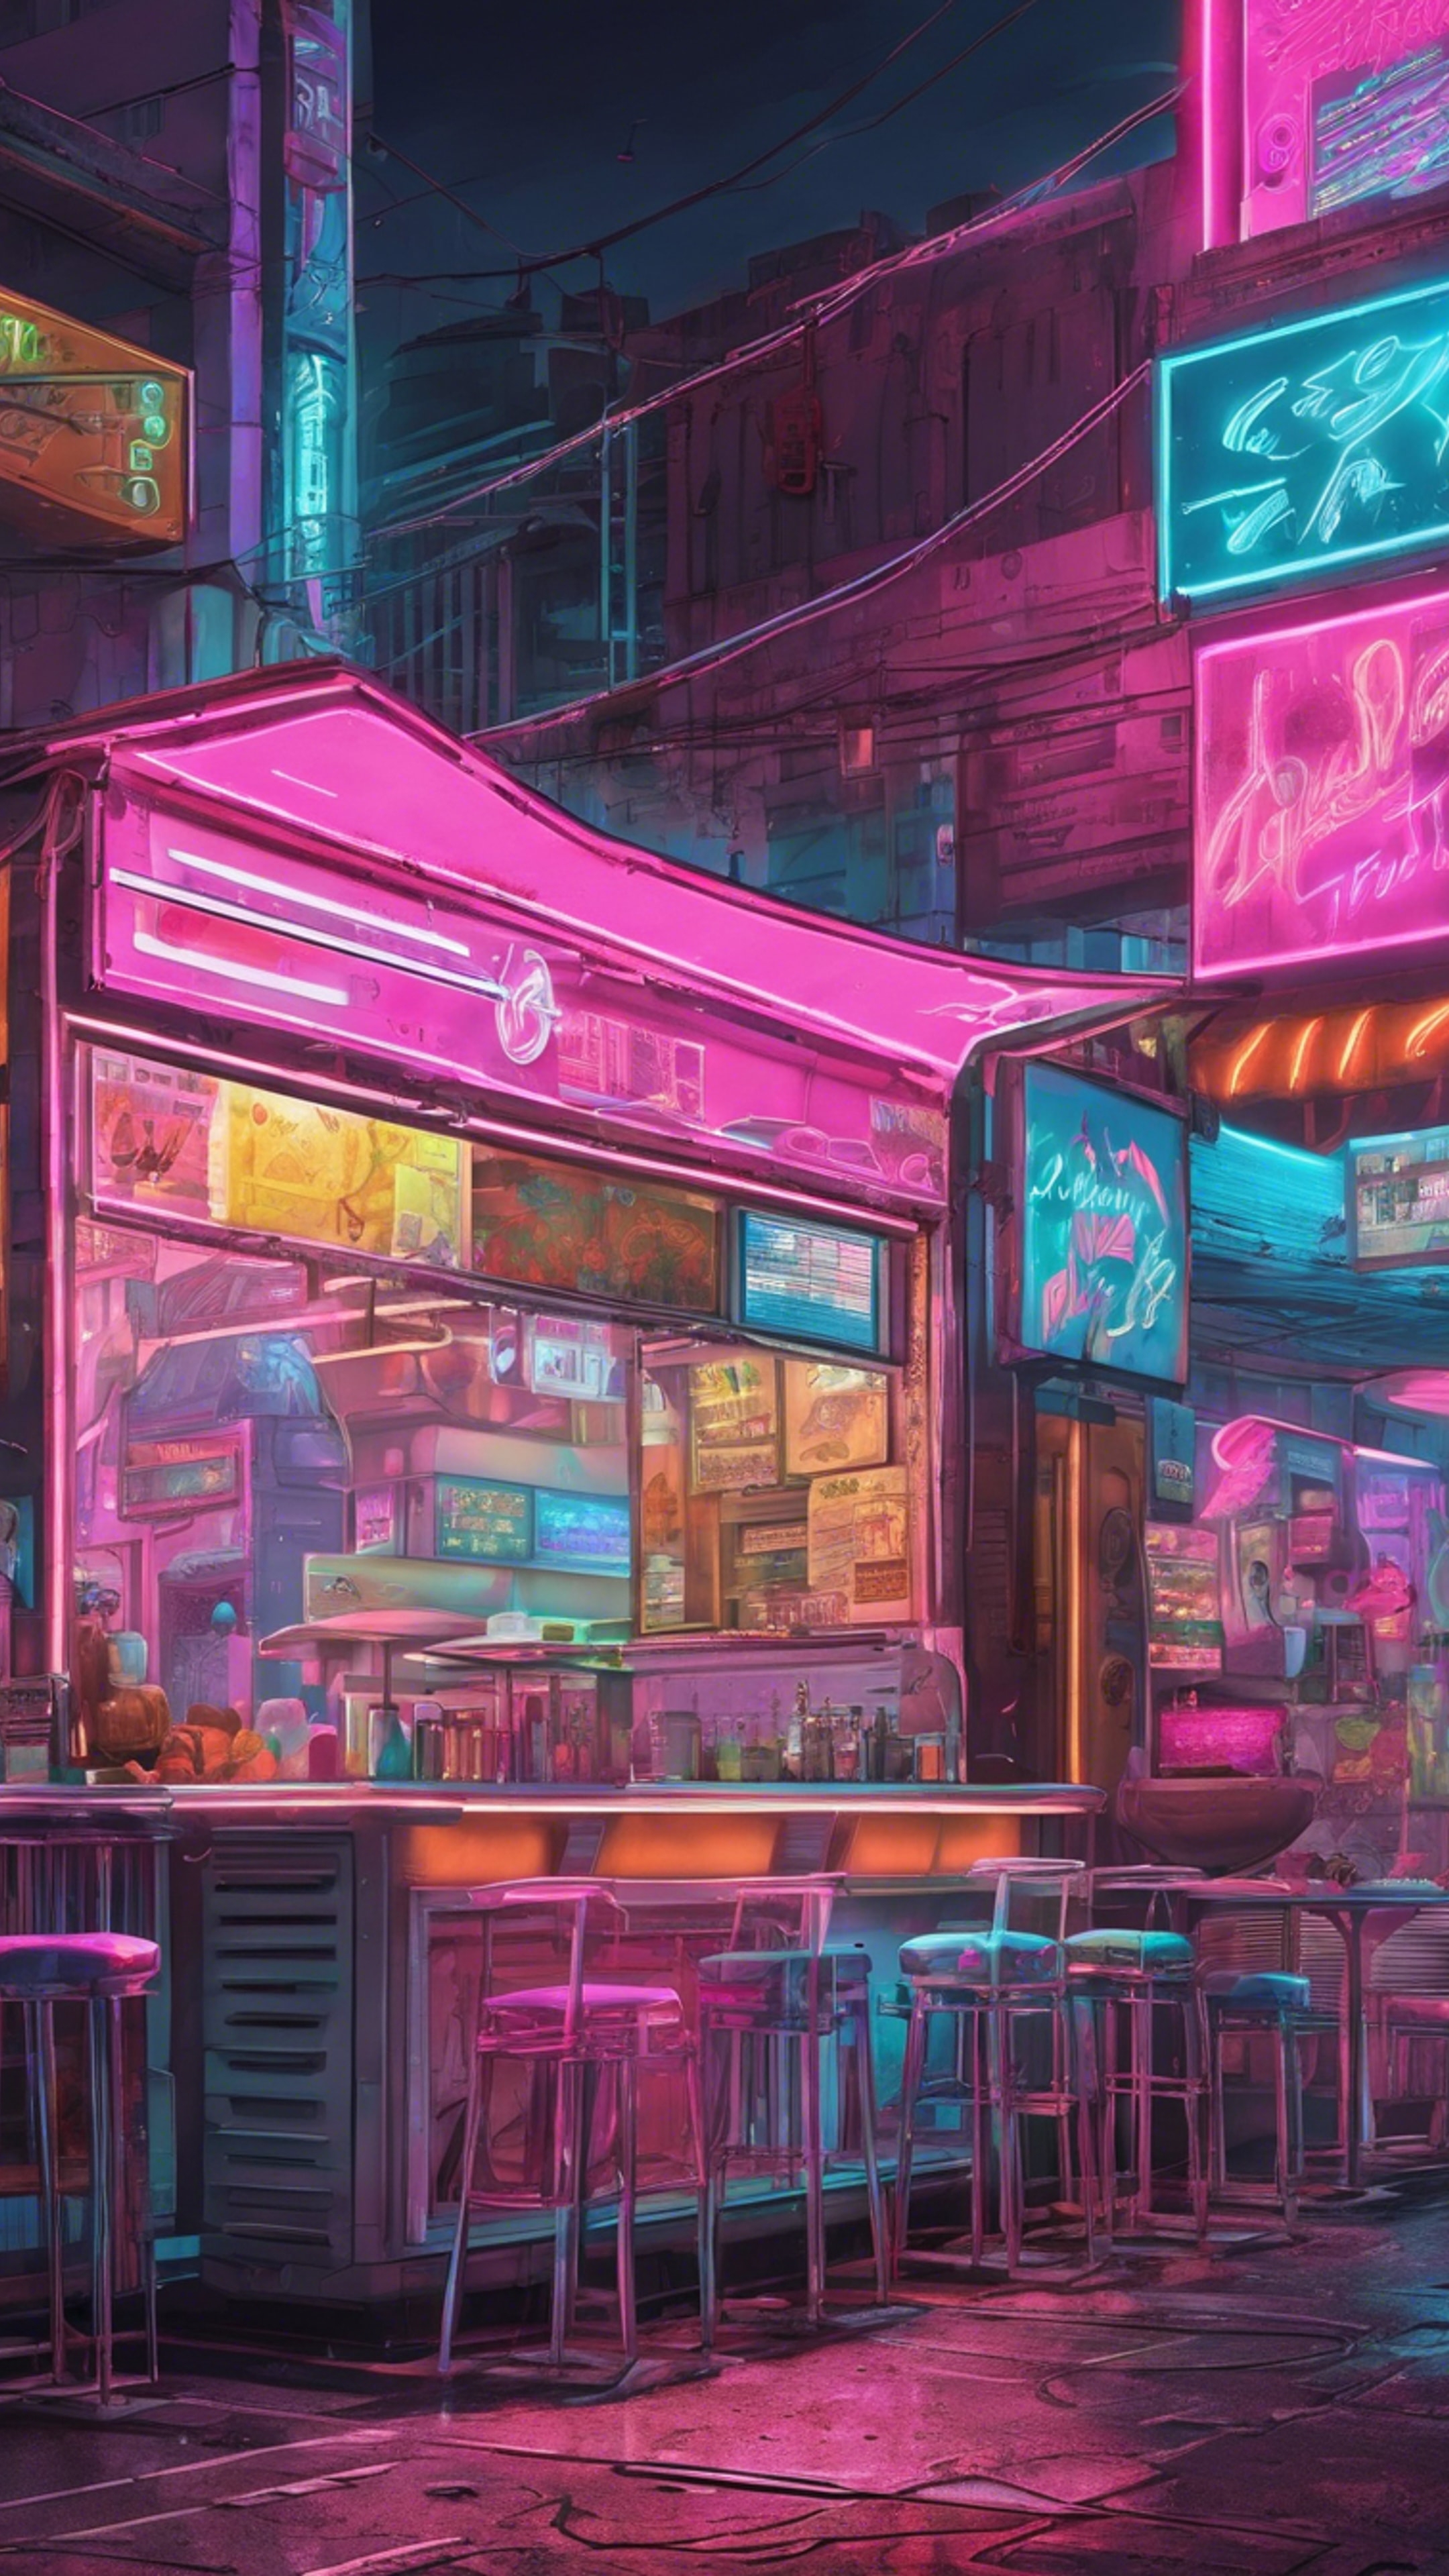 Night scene in a city where cyberpunk meets pastel at a popular street food stall. Papel de parede[607f993b19214cf28e30]